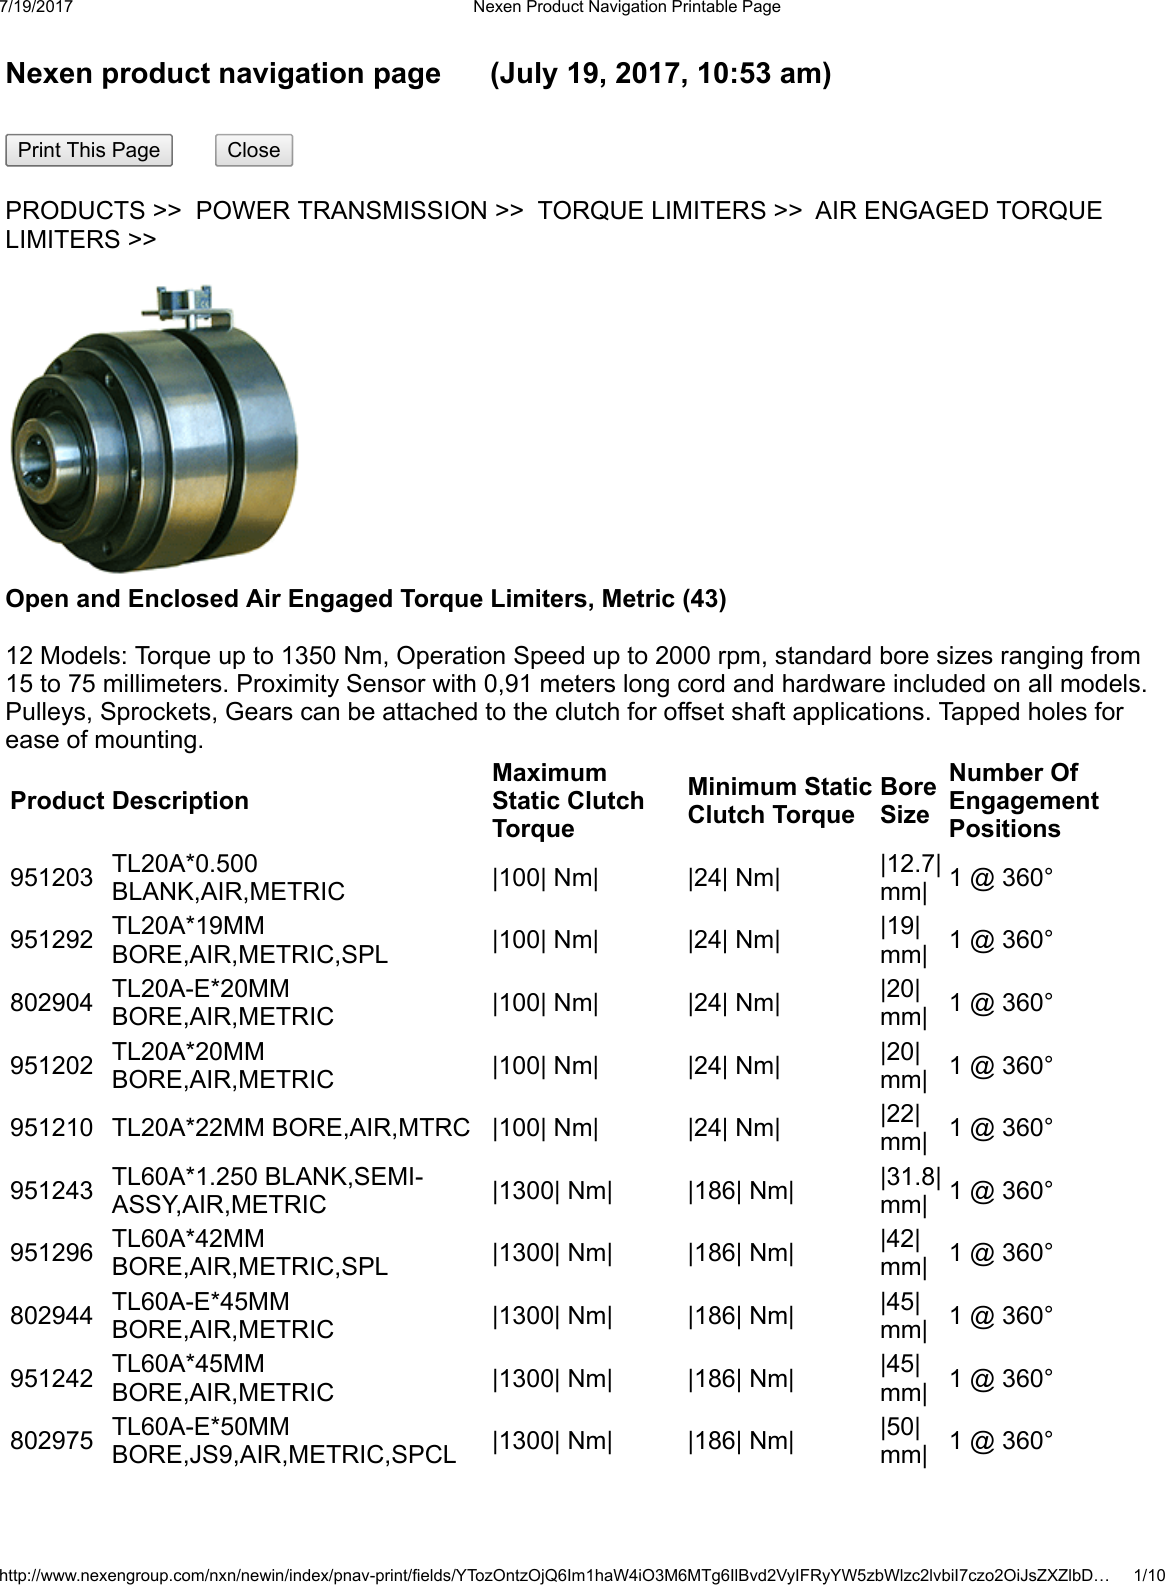 Nexen 803020 Enclosed Air Engaged Torque Limiter 